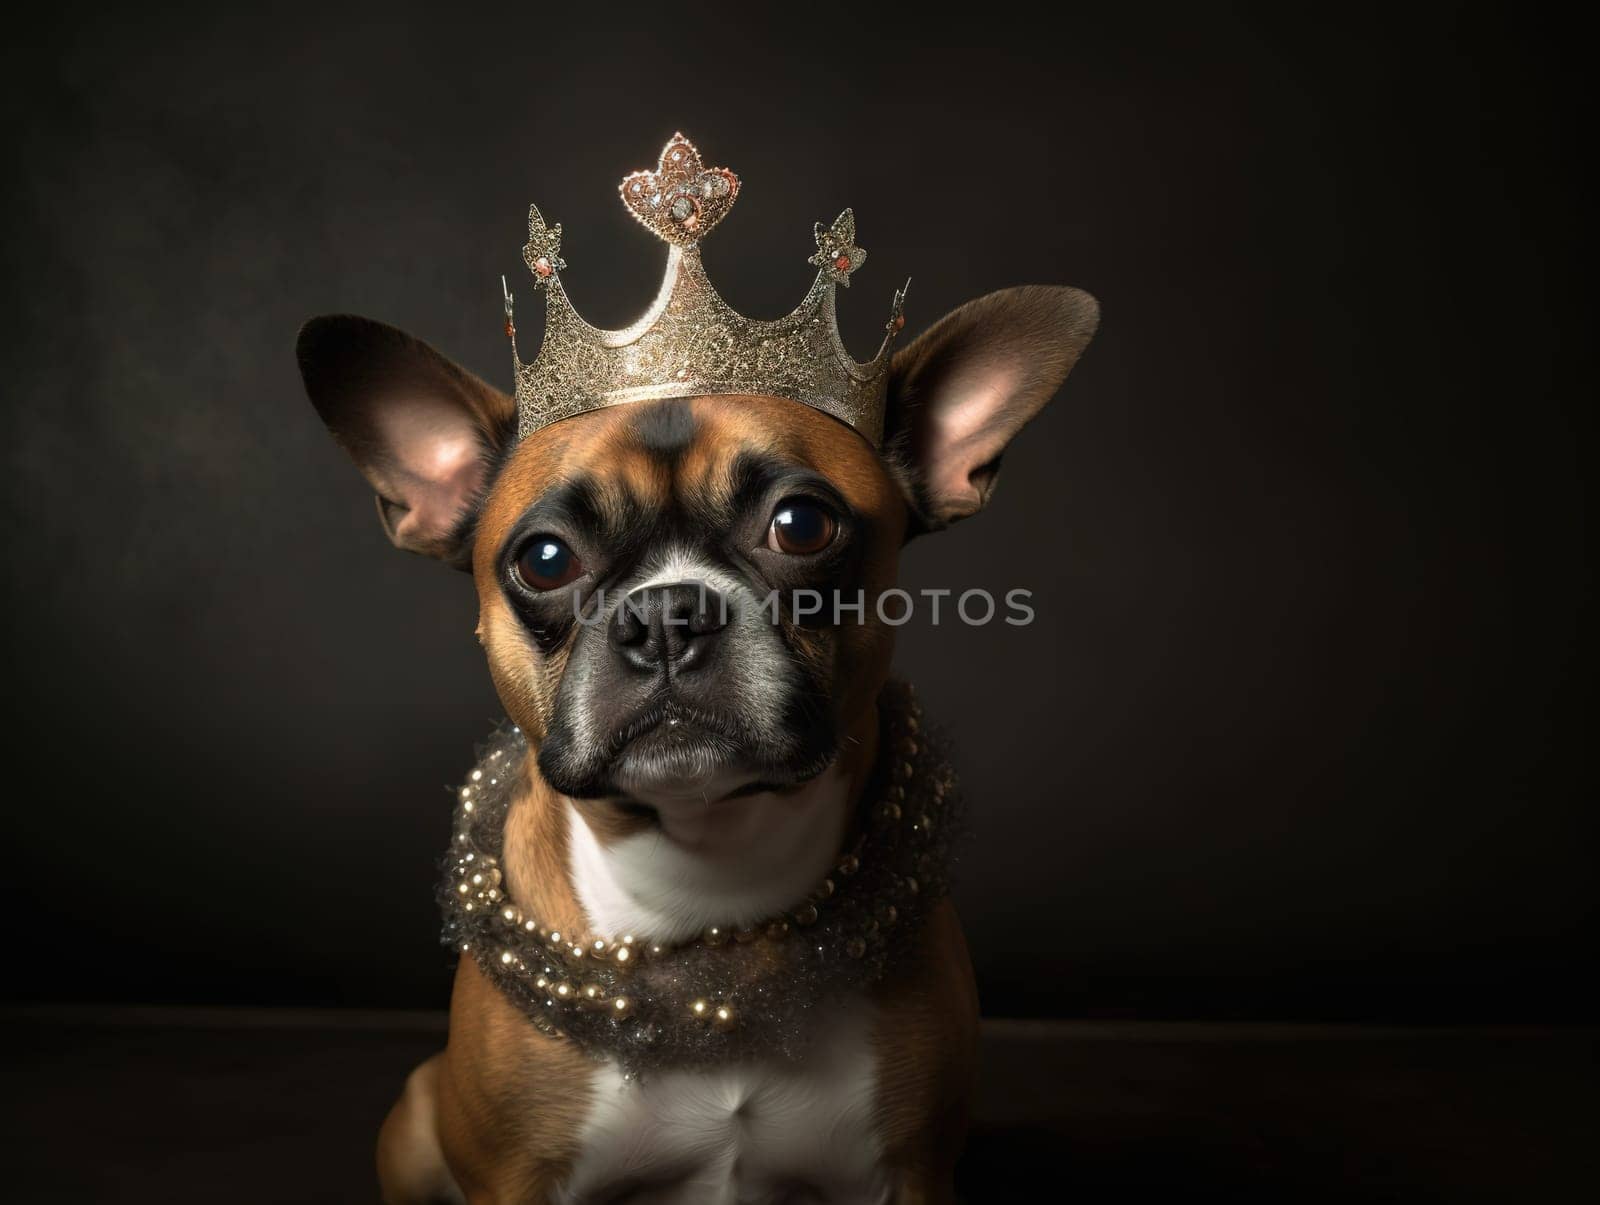 Dog In Carnival Crown Sits On Blurred Background Of Living Room by GekaSkr